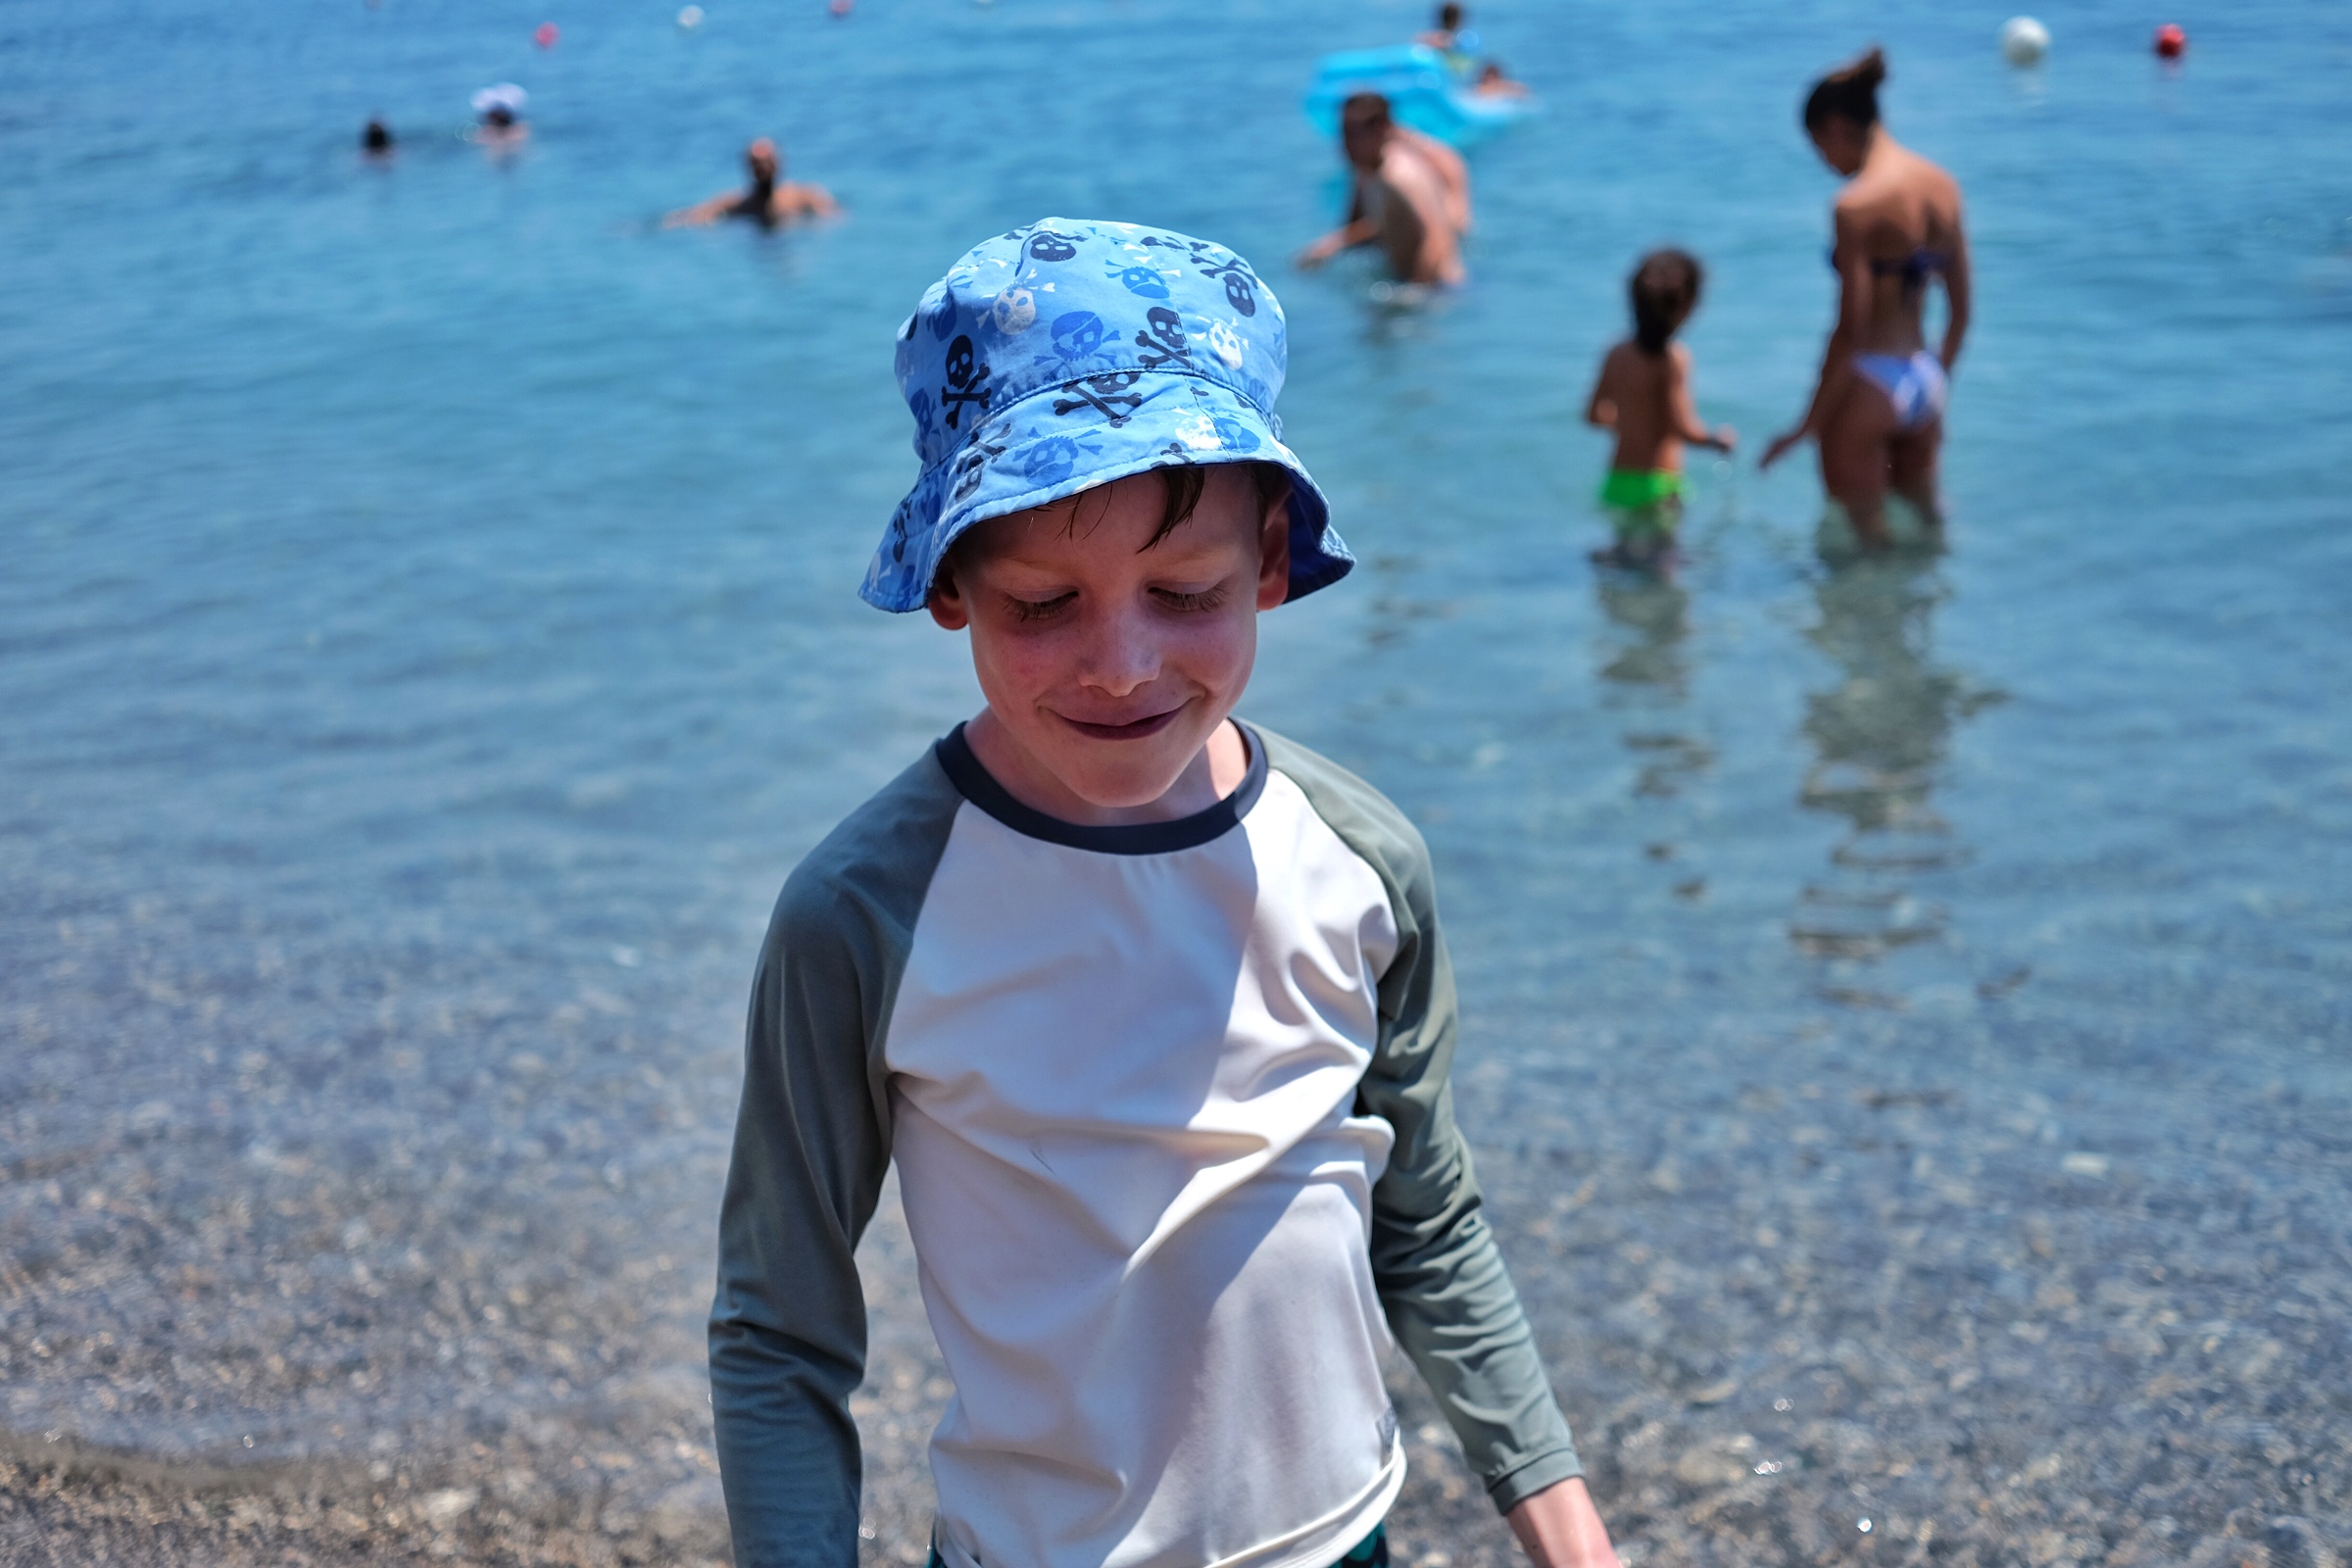 Rowan enjoying the beach in Amalfi.